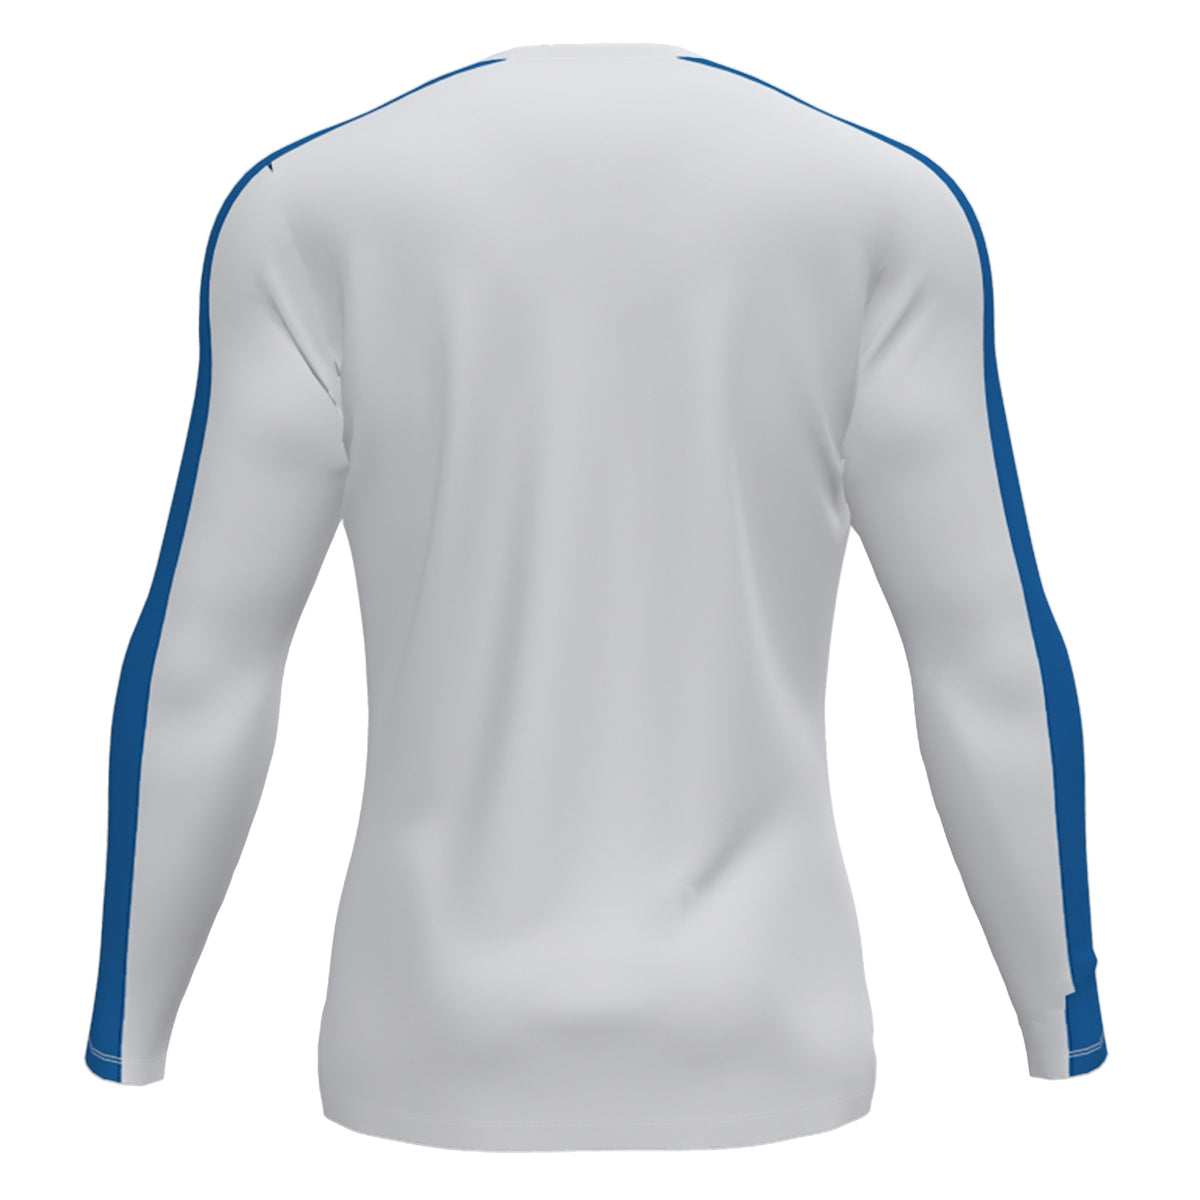 Joma Academy III Junior L/S Football Shirt: White/Royal Blue